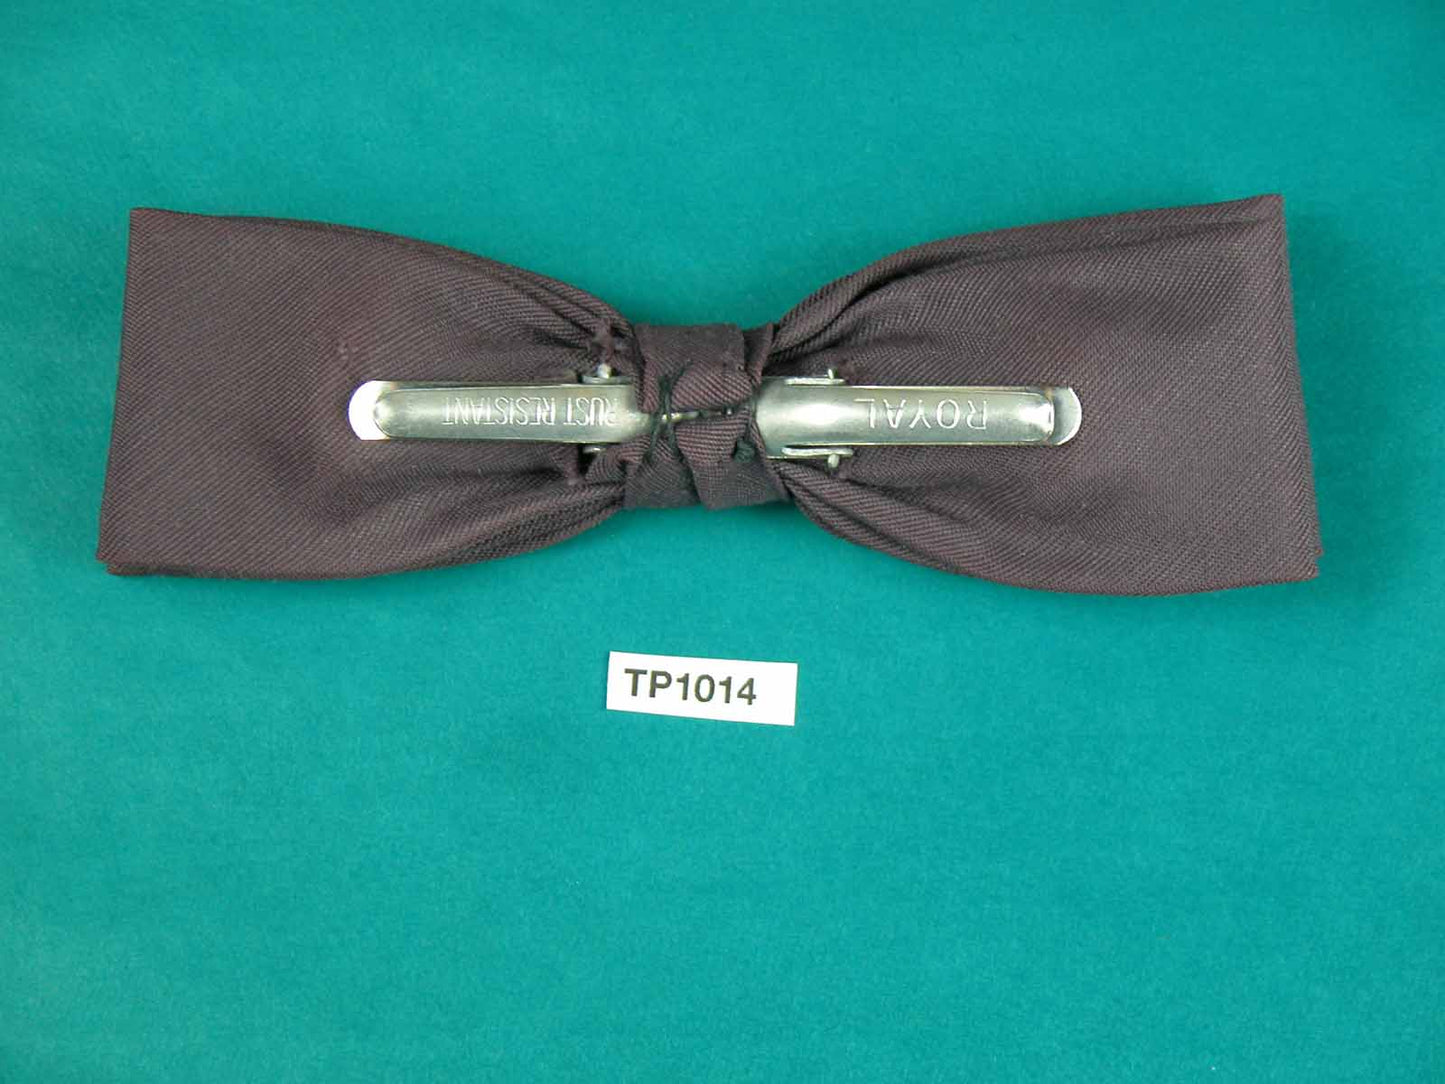 Vintage aubergine square end clip on bow tie